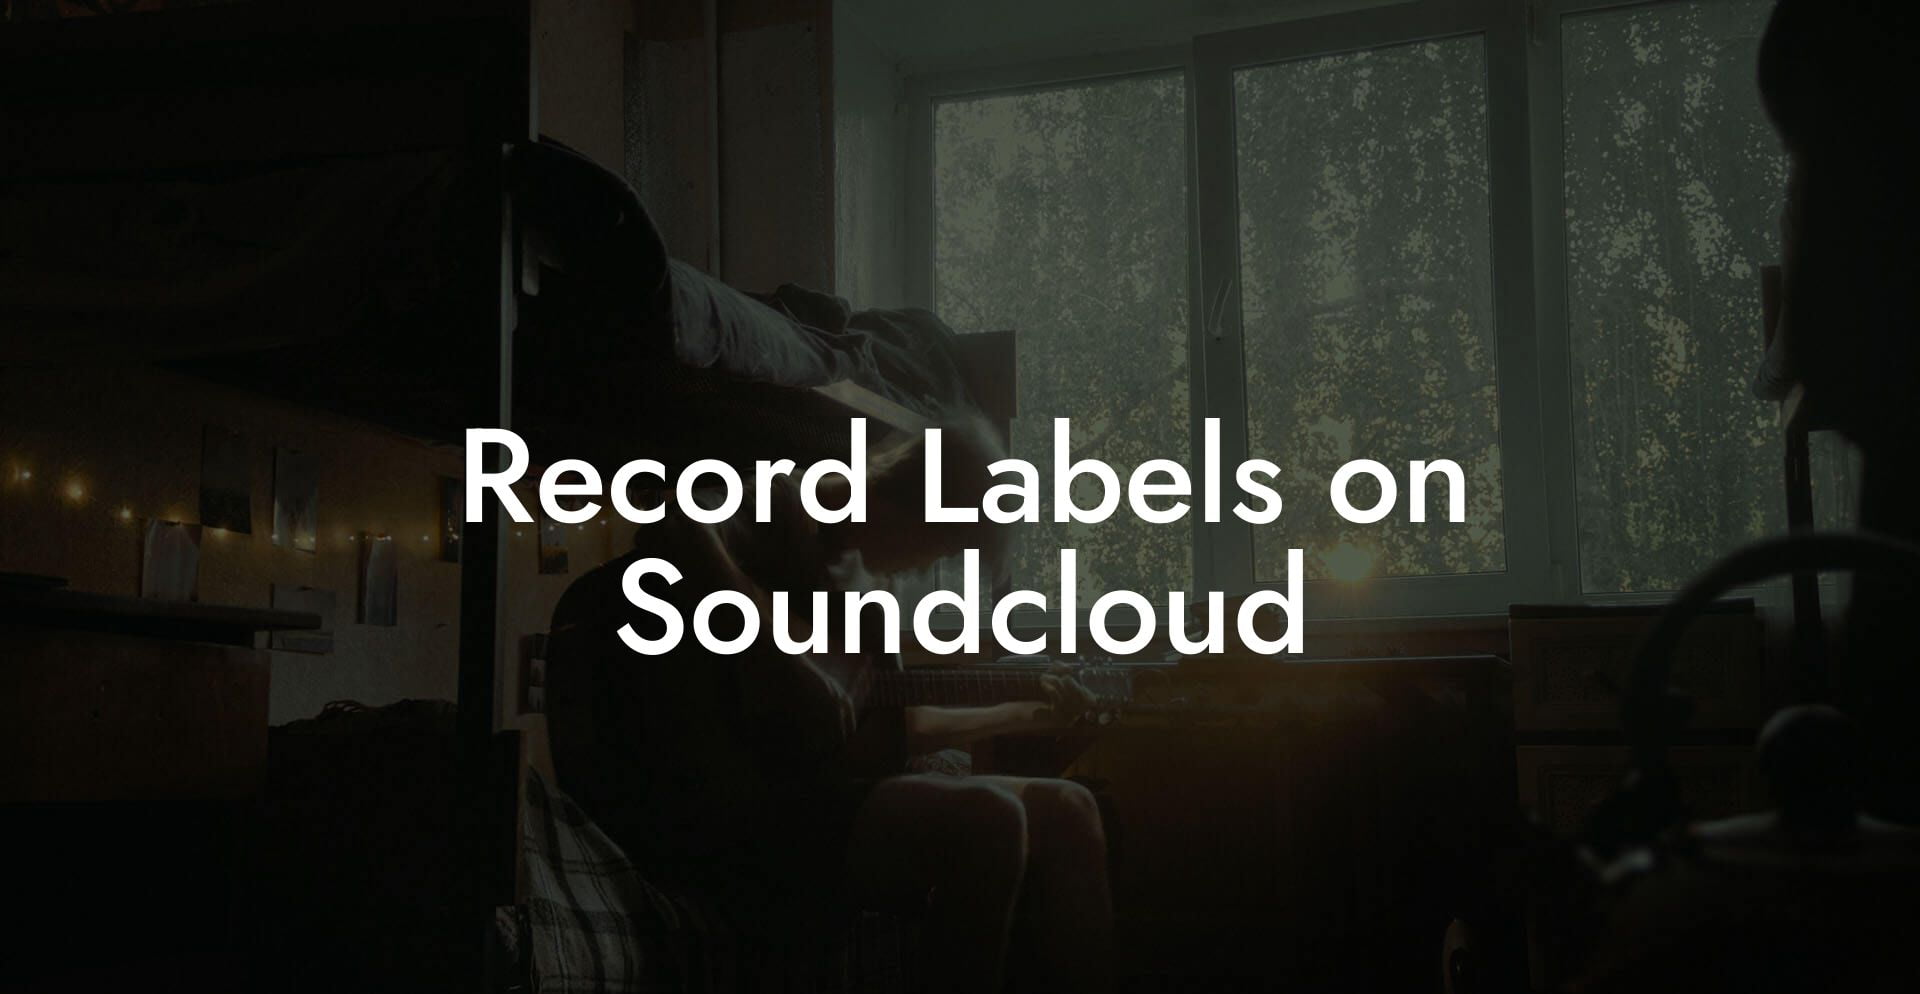 Record Labels on Soundcloud